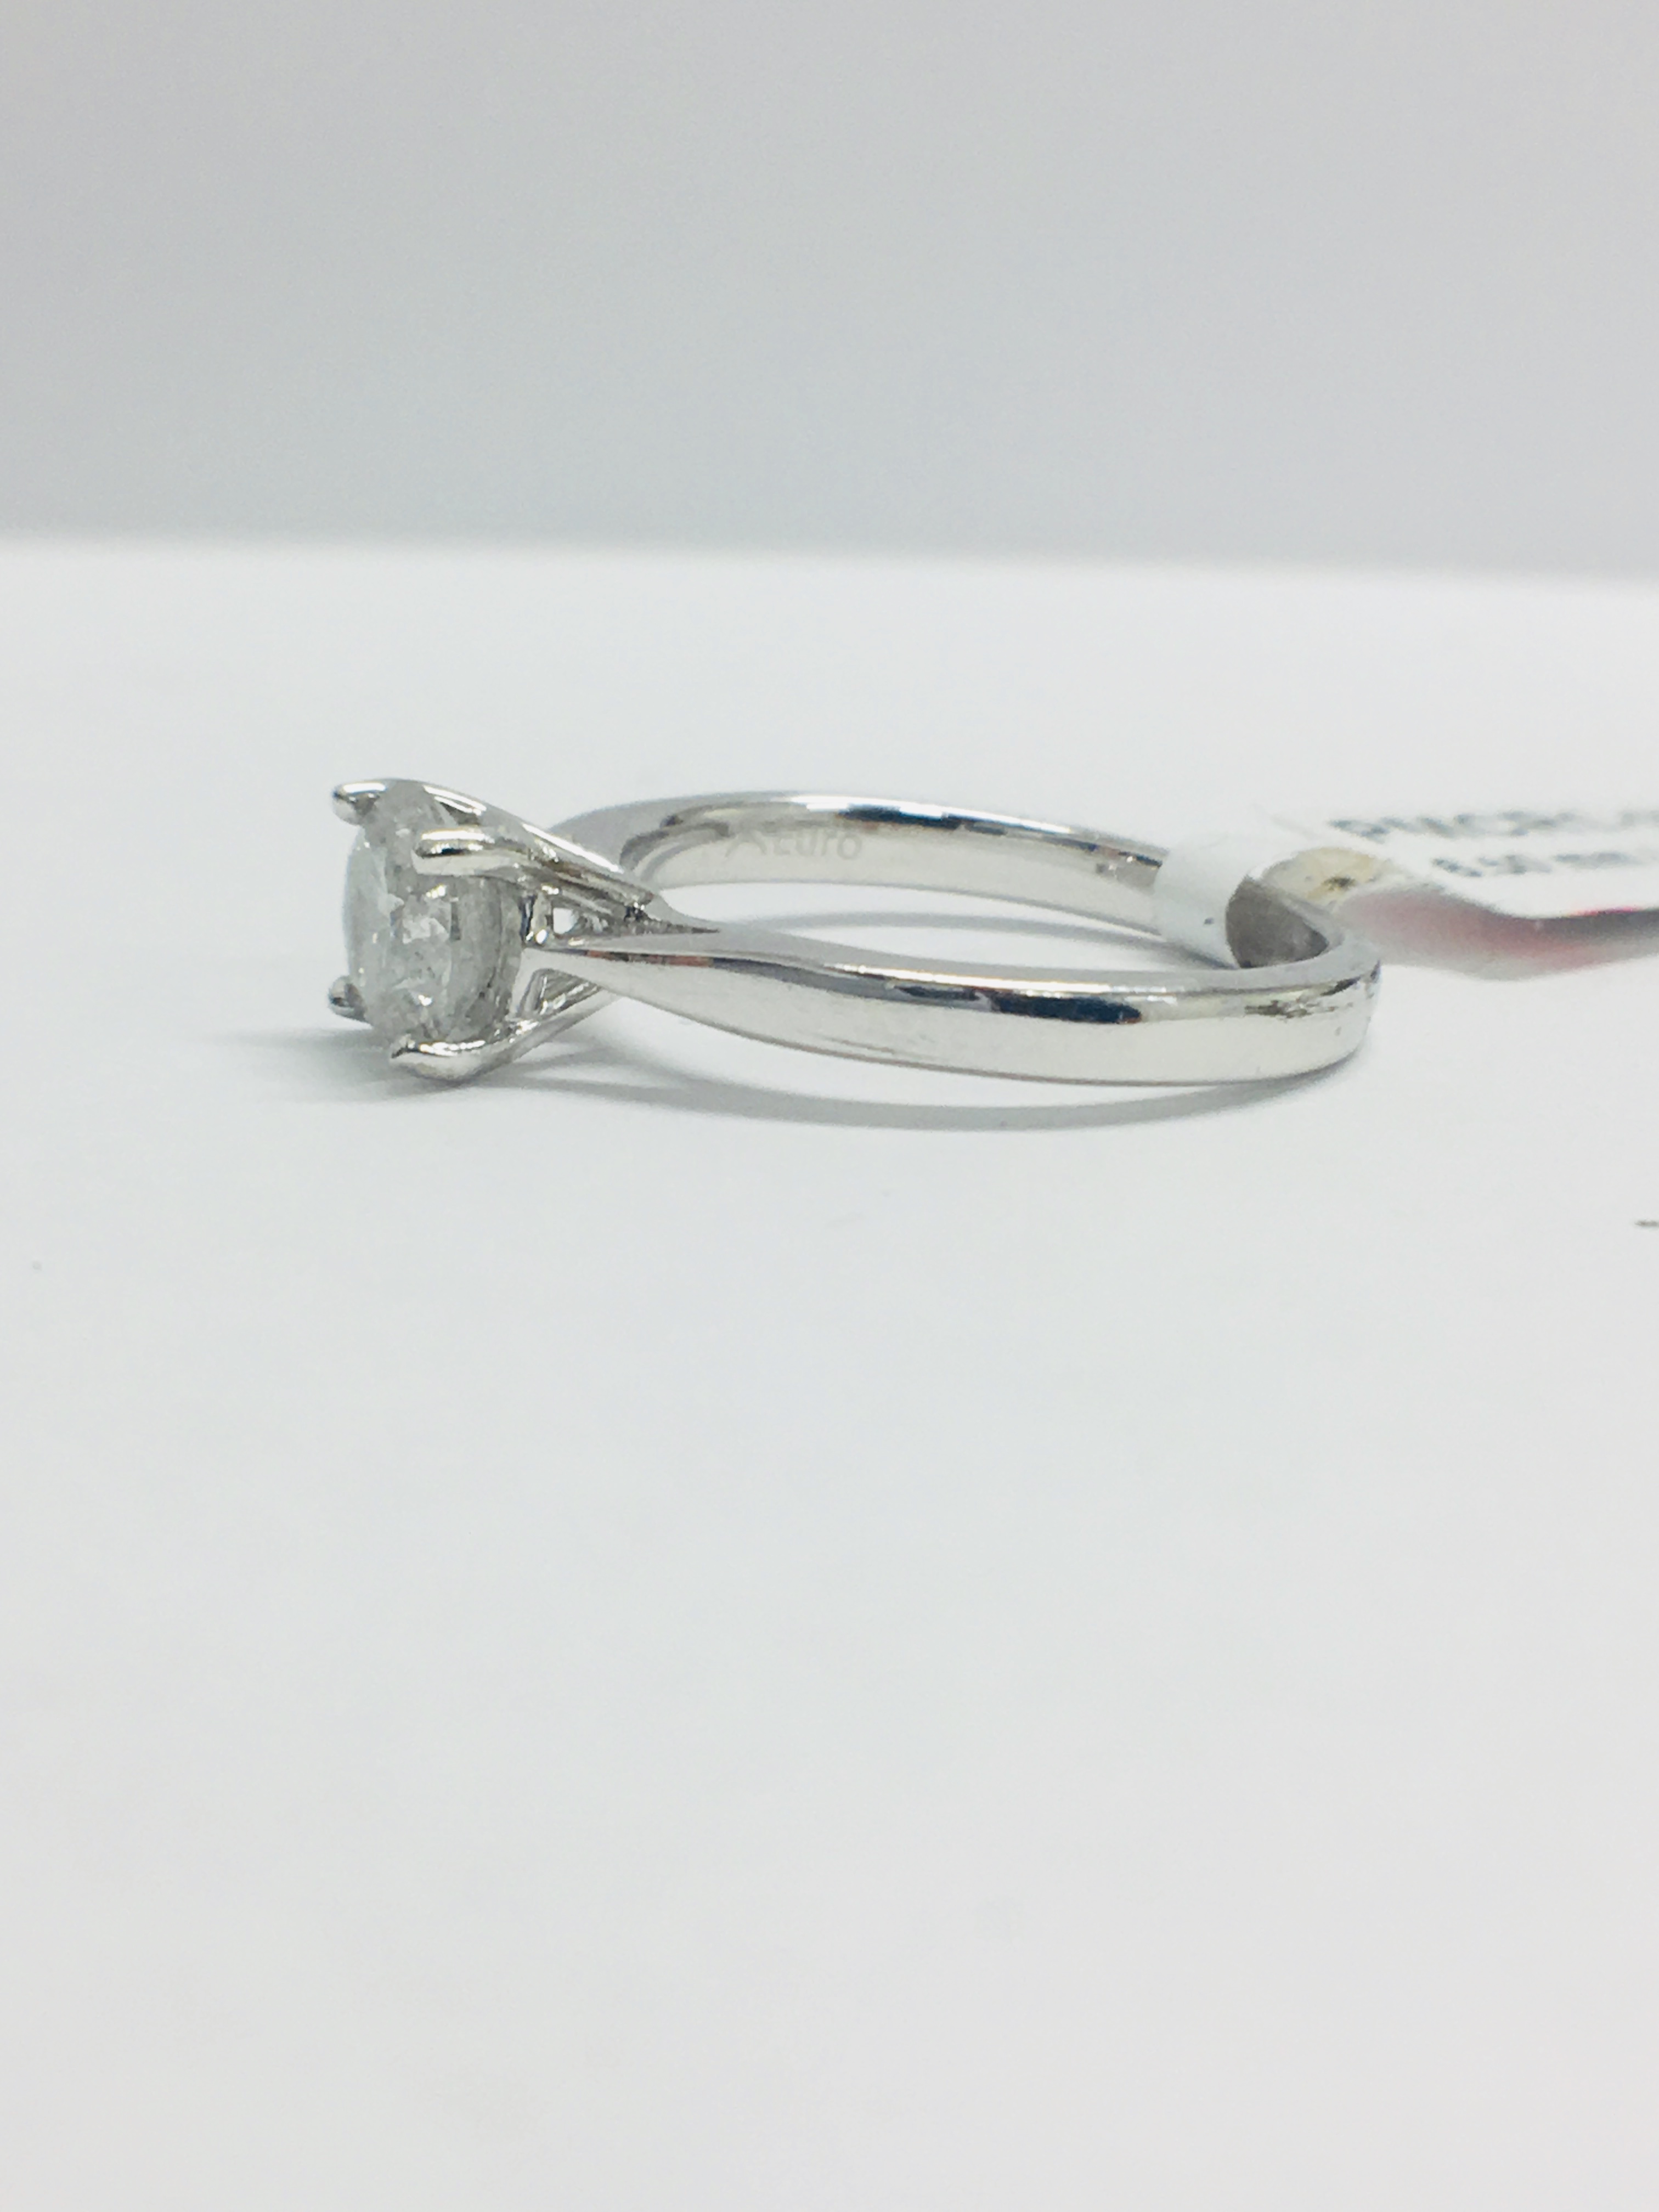 Platinum Solitaire 4 Claw Diamond Ring, - Image 3 of 6